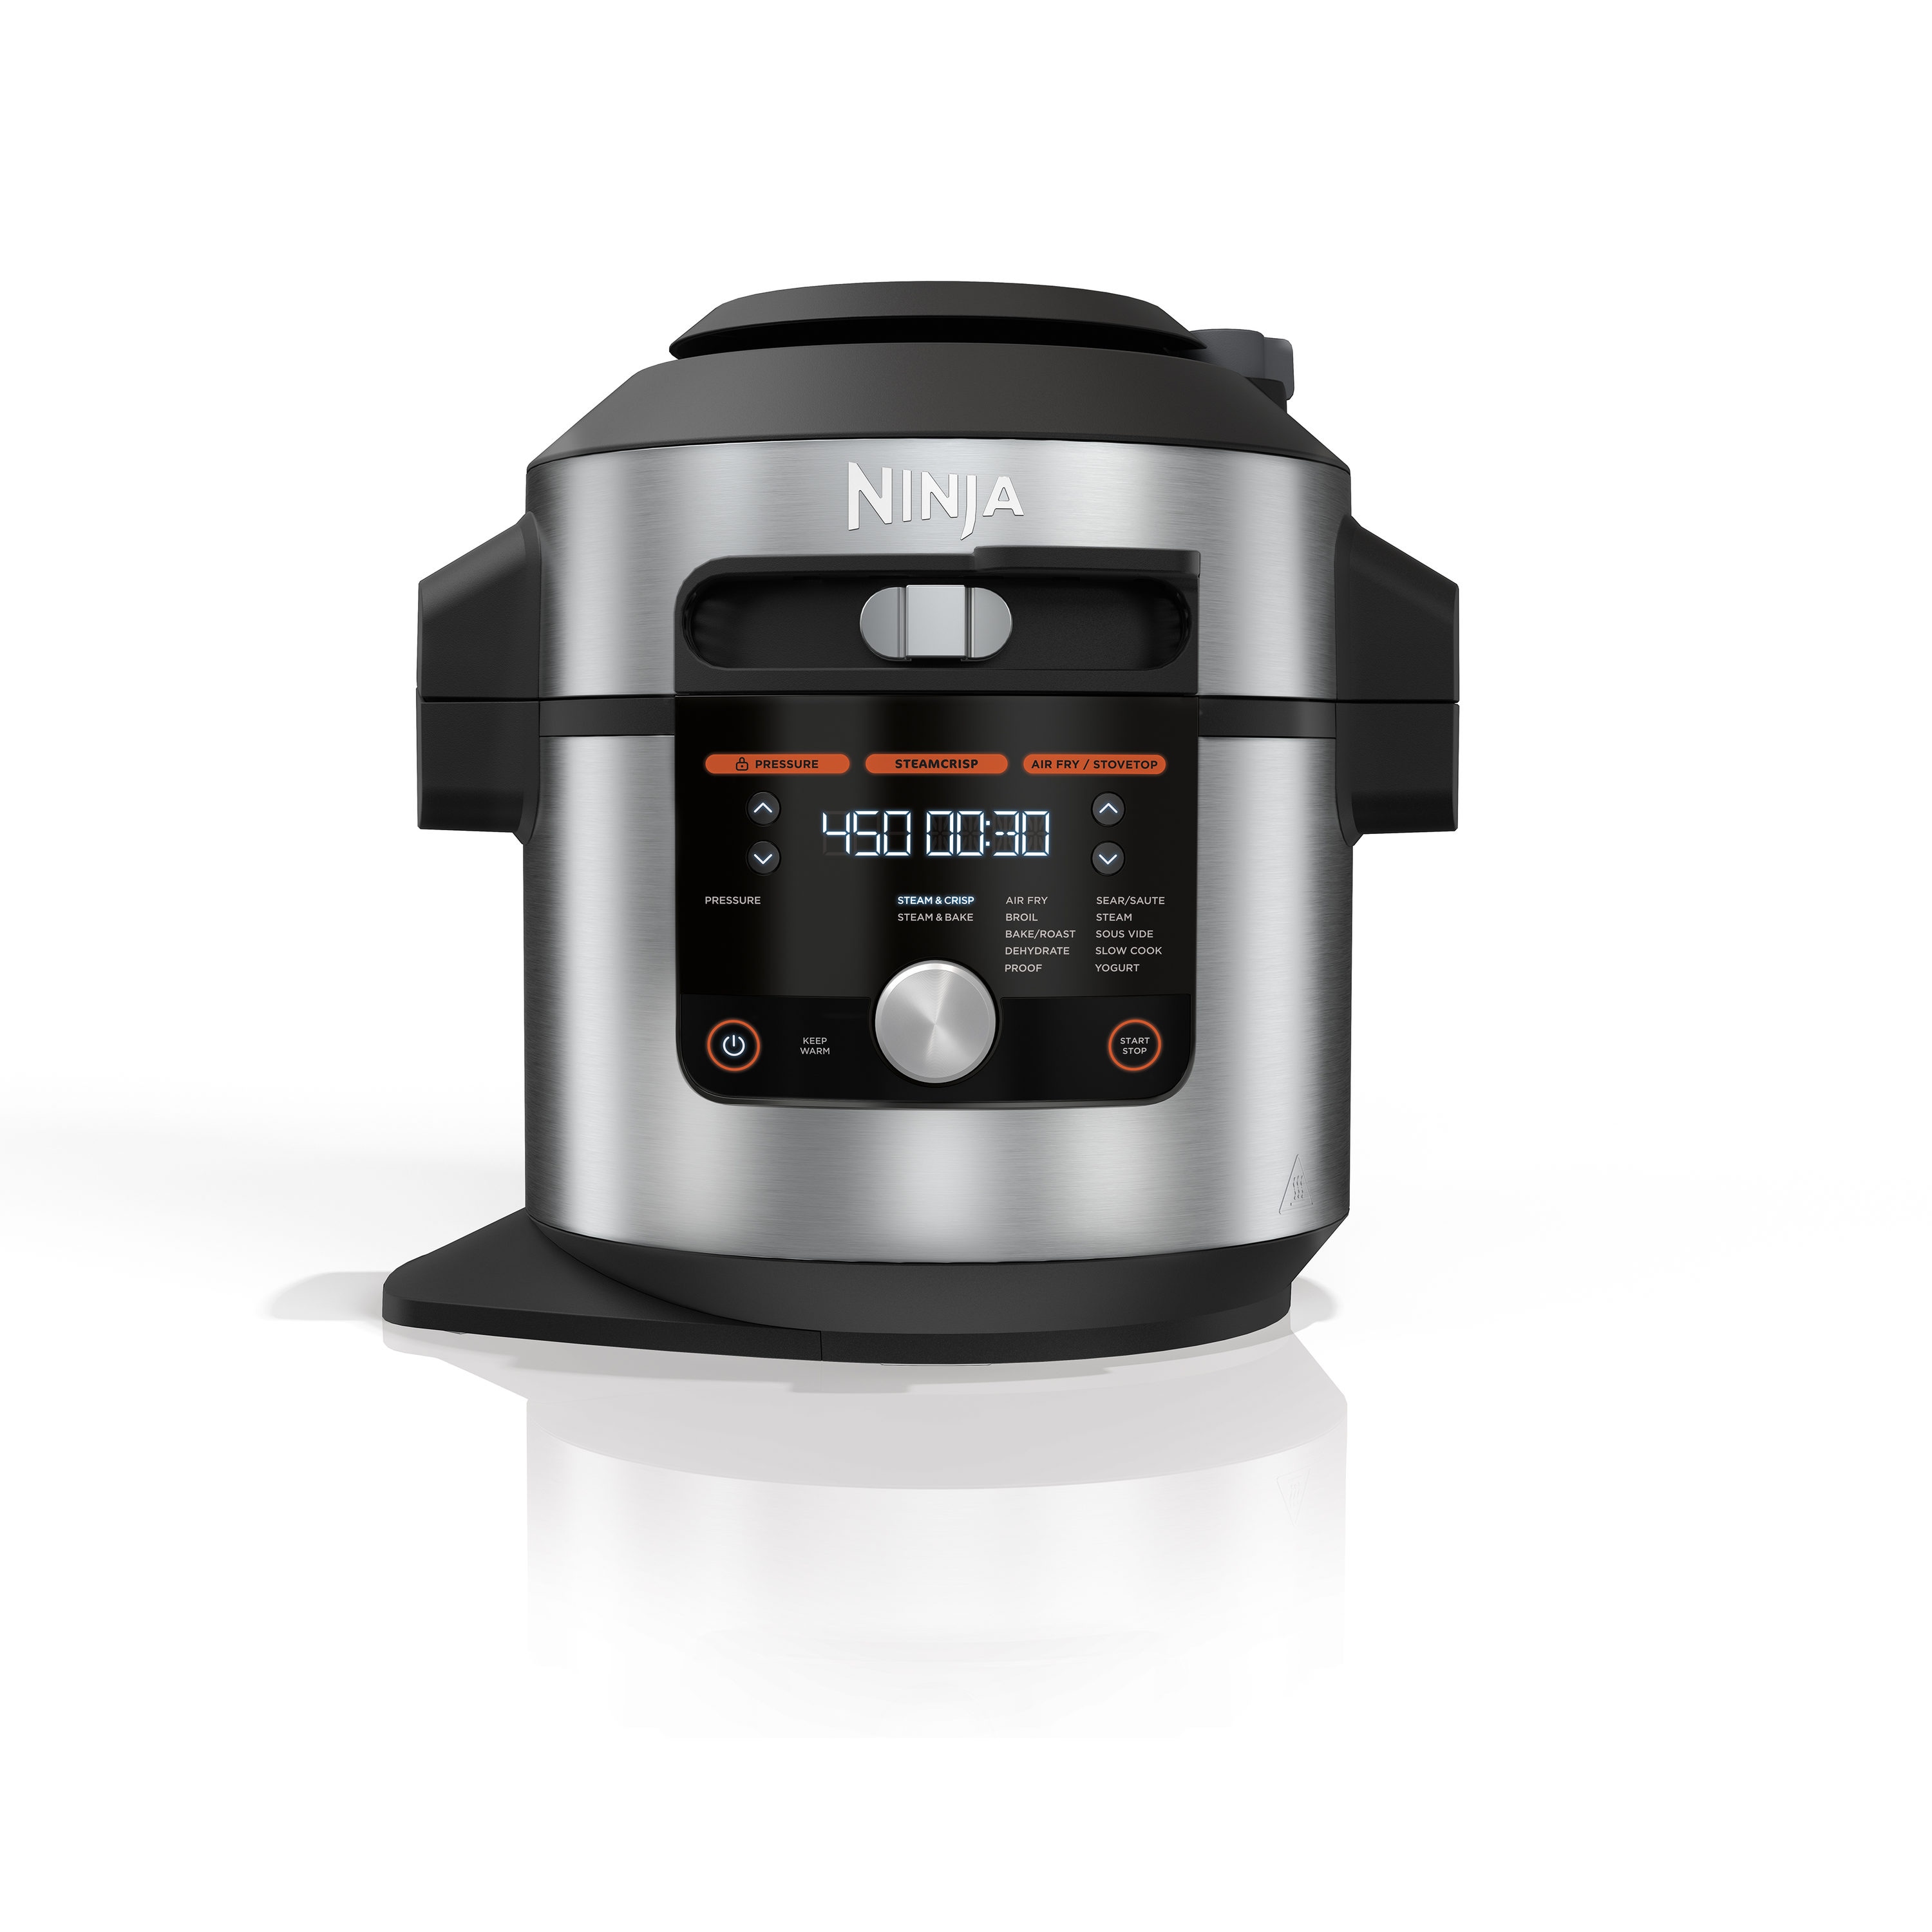 Ninja 8-Quart Programmable Electric Pressure Cooker at